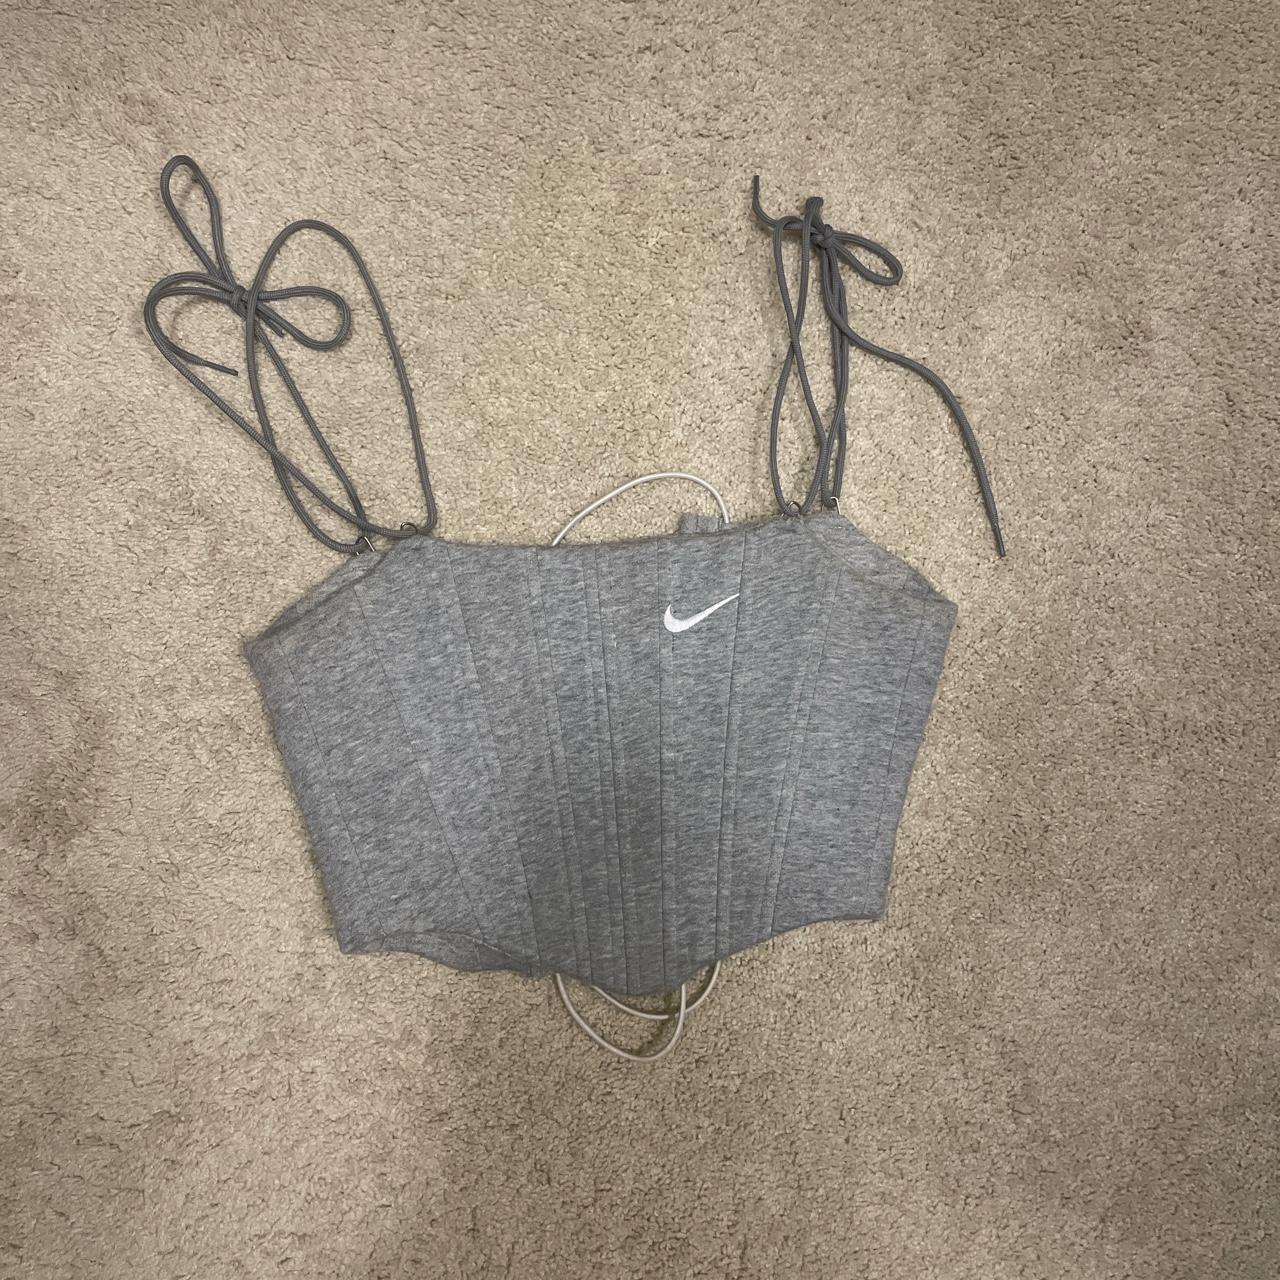 Nike corset - Depop